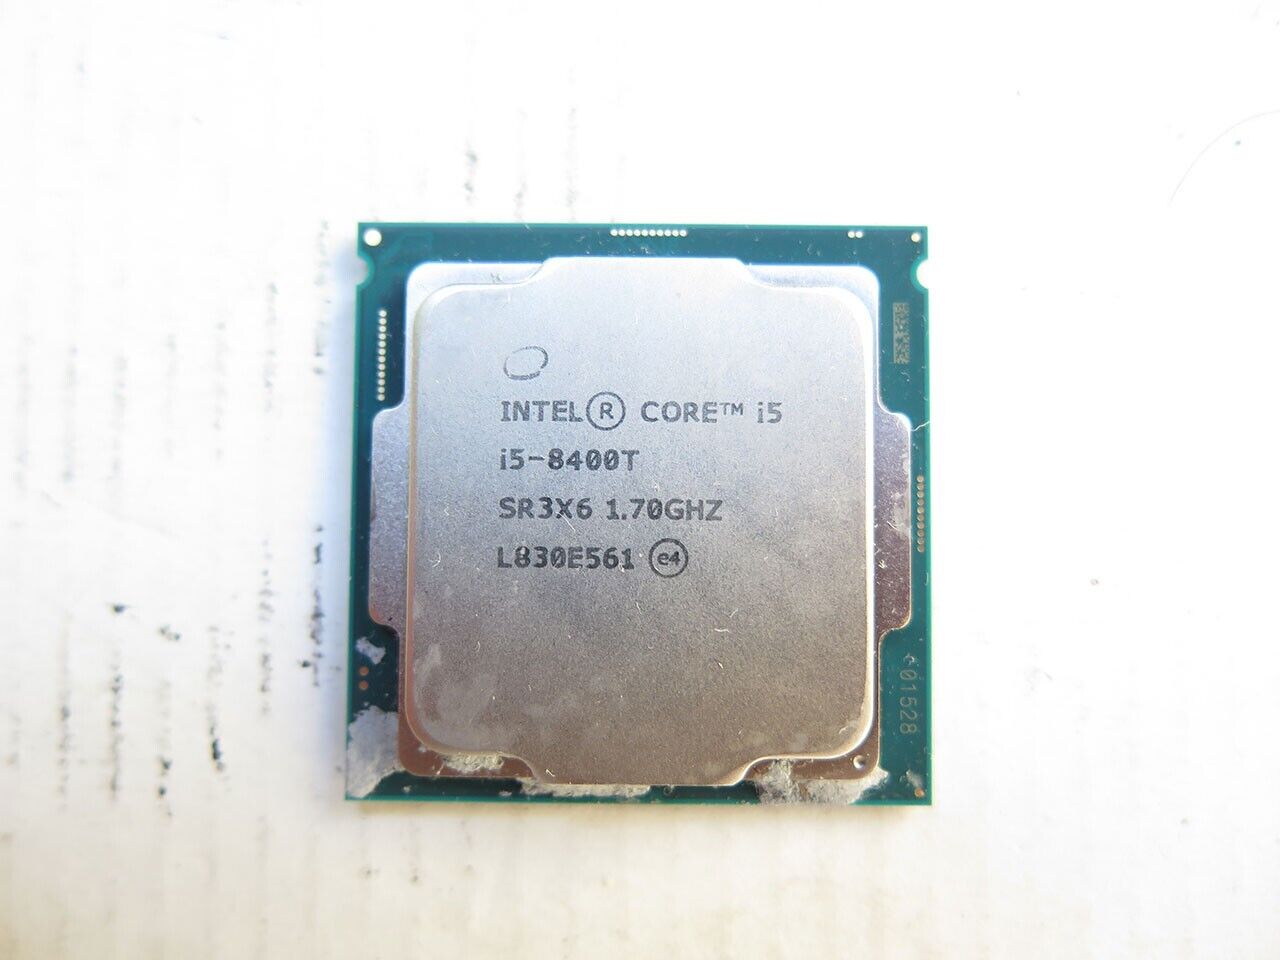 Intel Core i5-8400T Processor Six Core 1.70GHz SR3X6